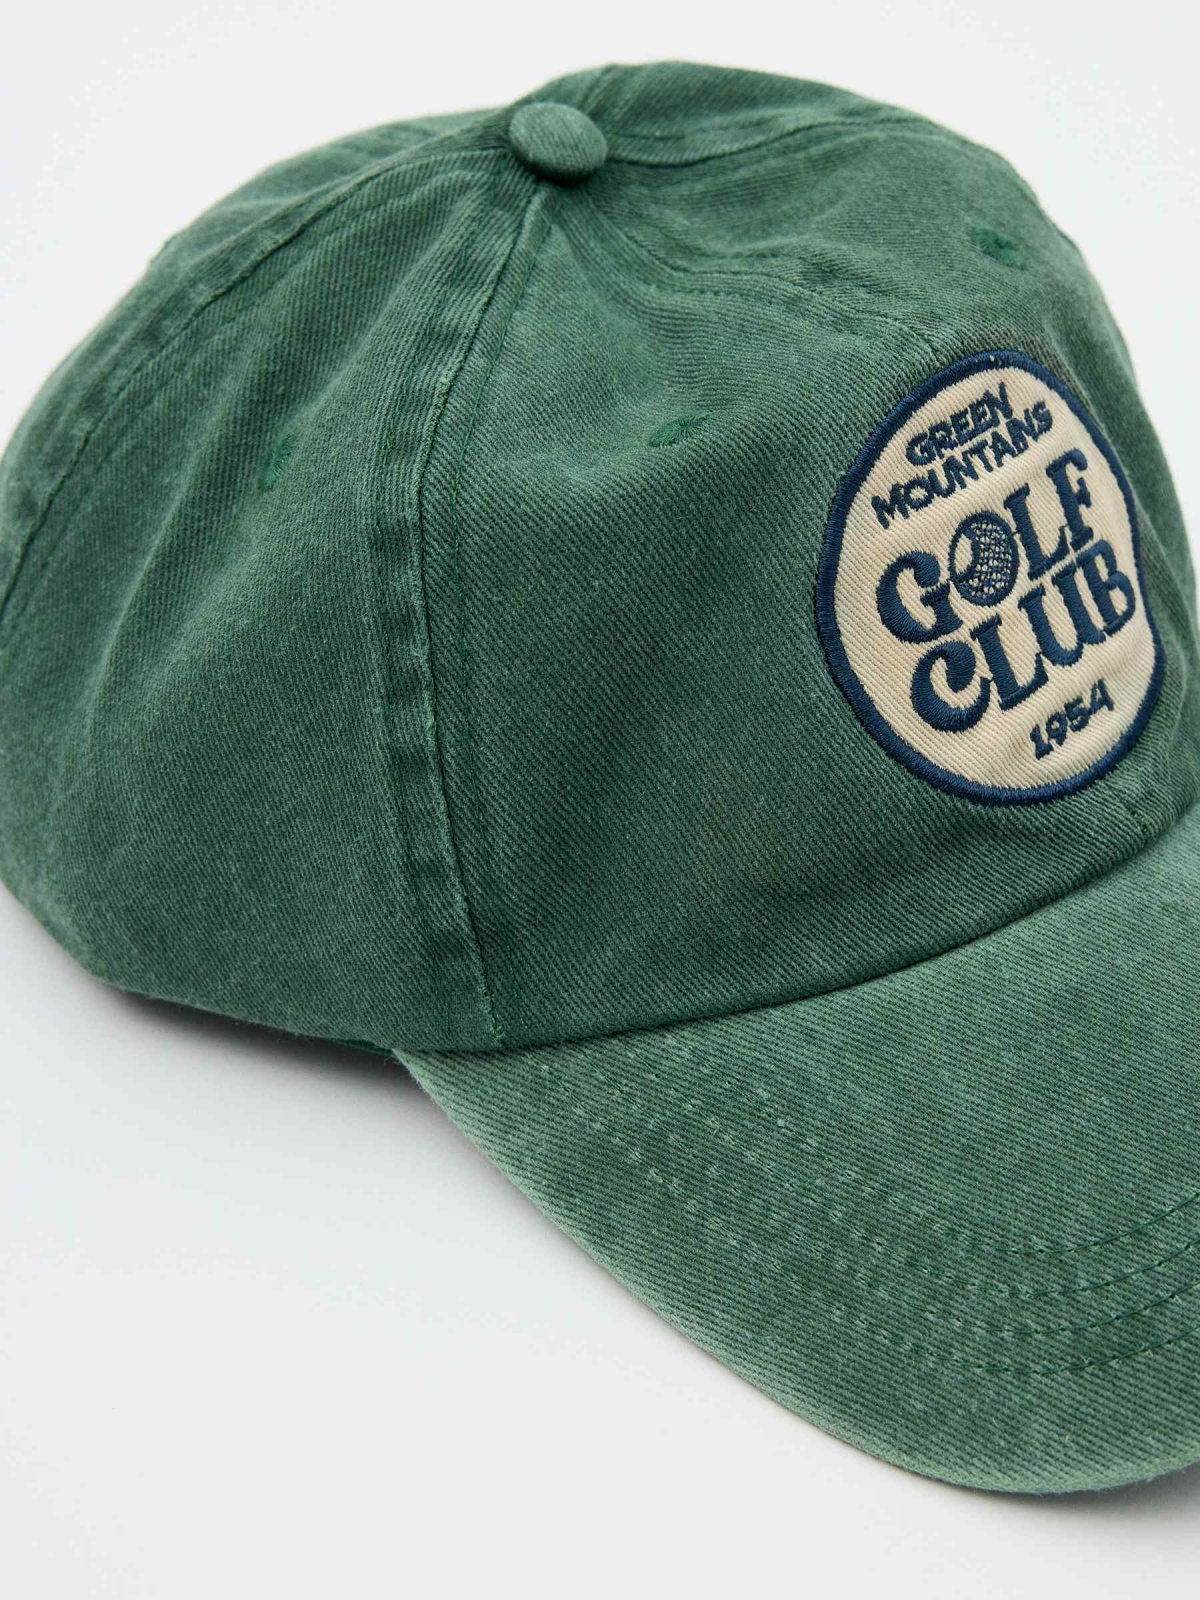 Baseball cap logo green detail view